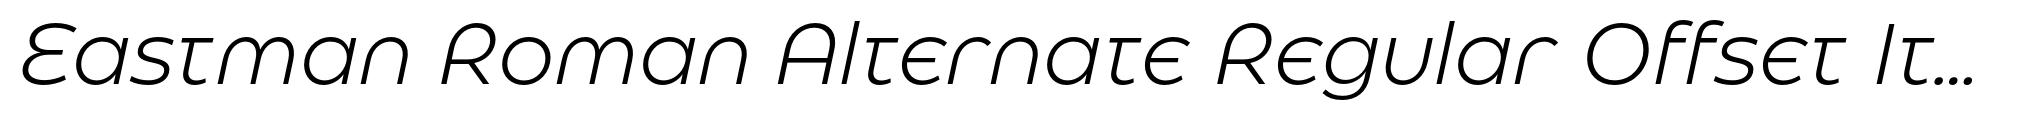 Eastman Roman Alternate Regular Offset Italic image